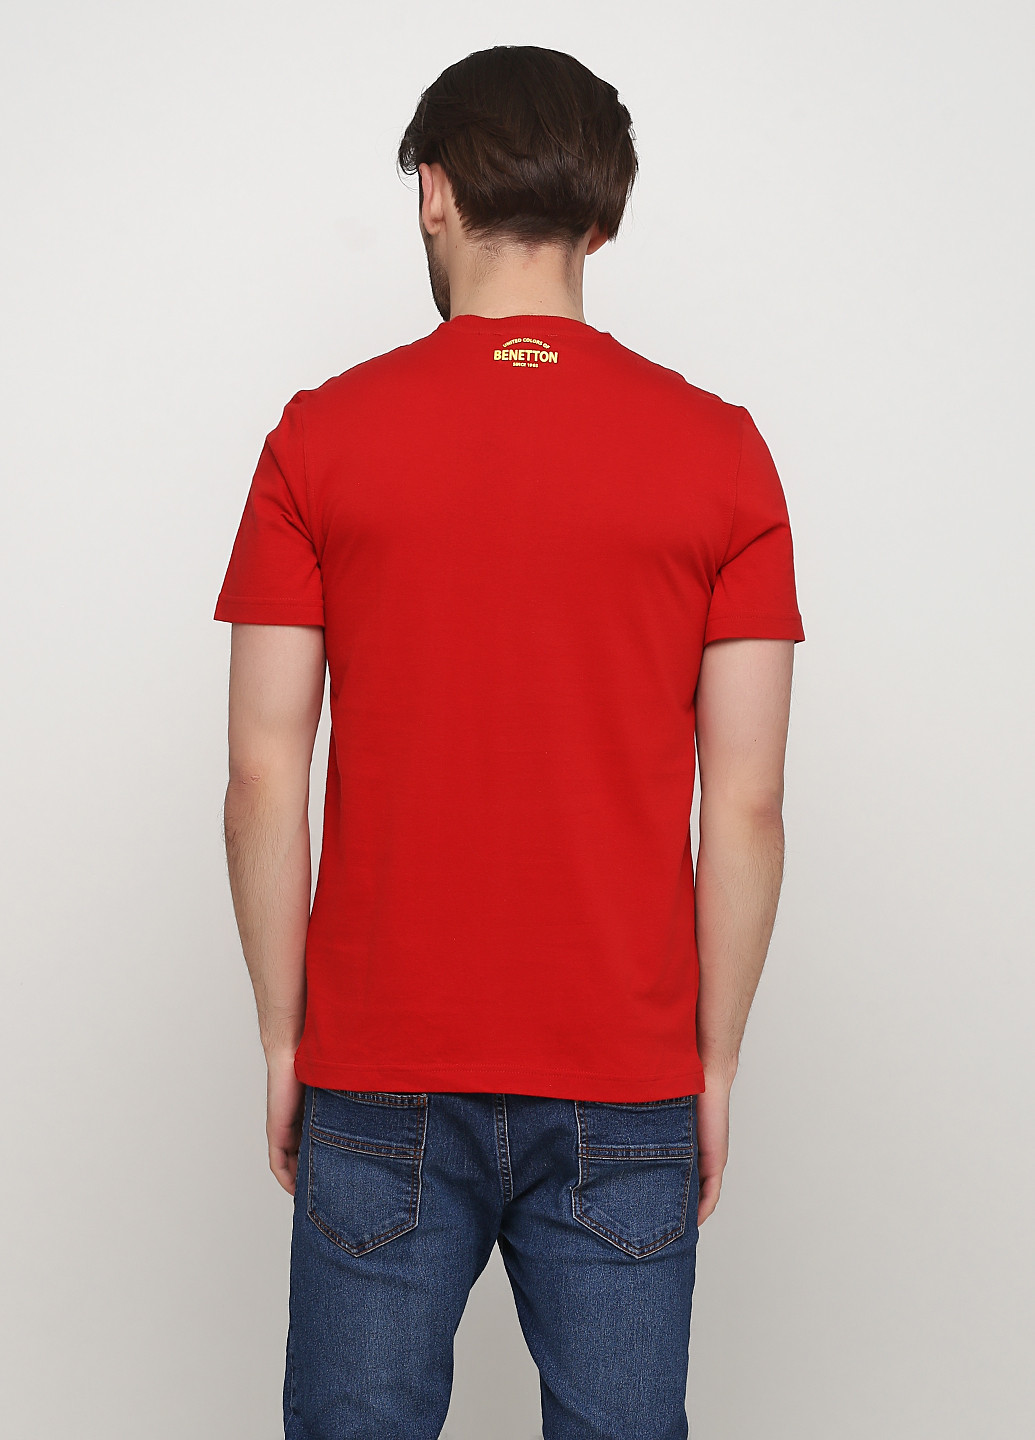 Красная футболка United Colors of Benetton